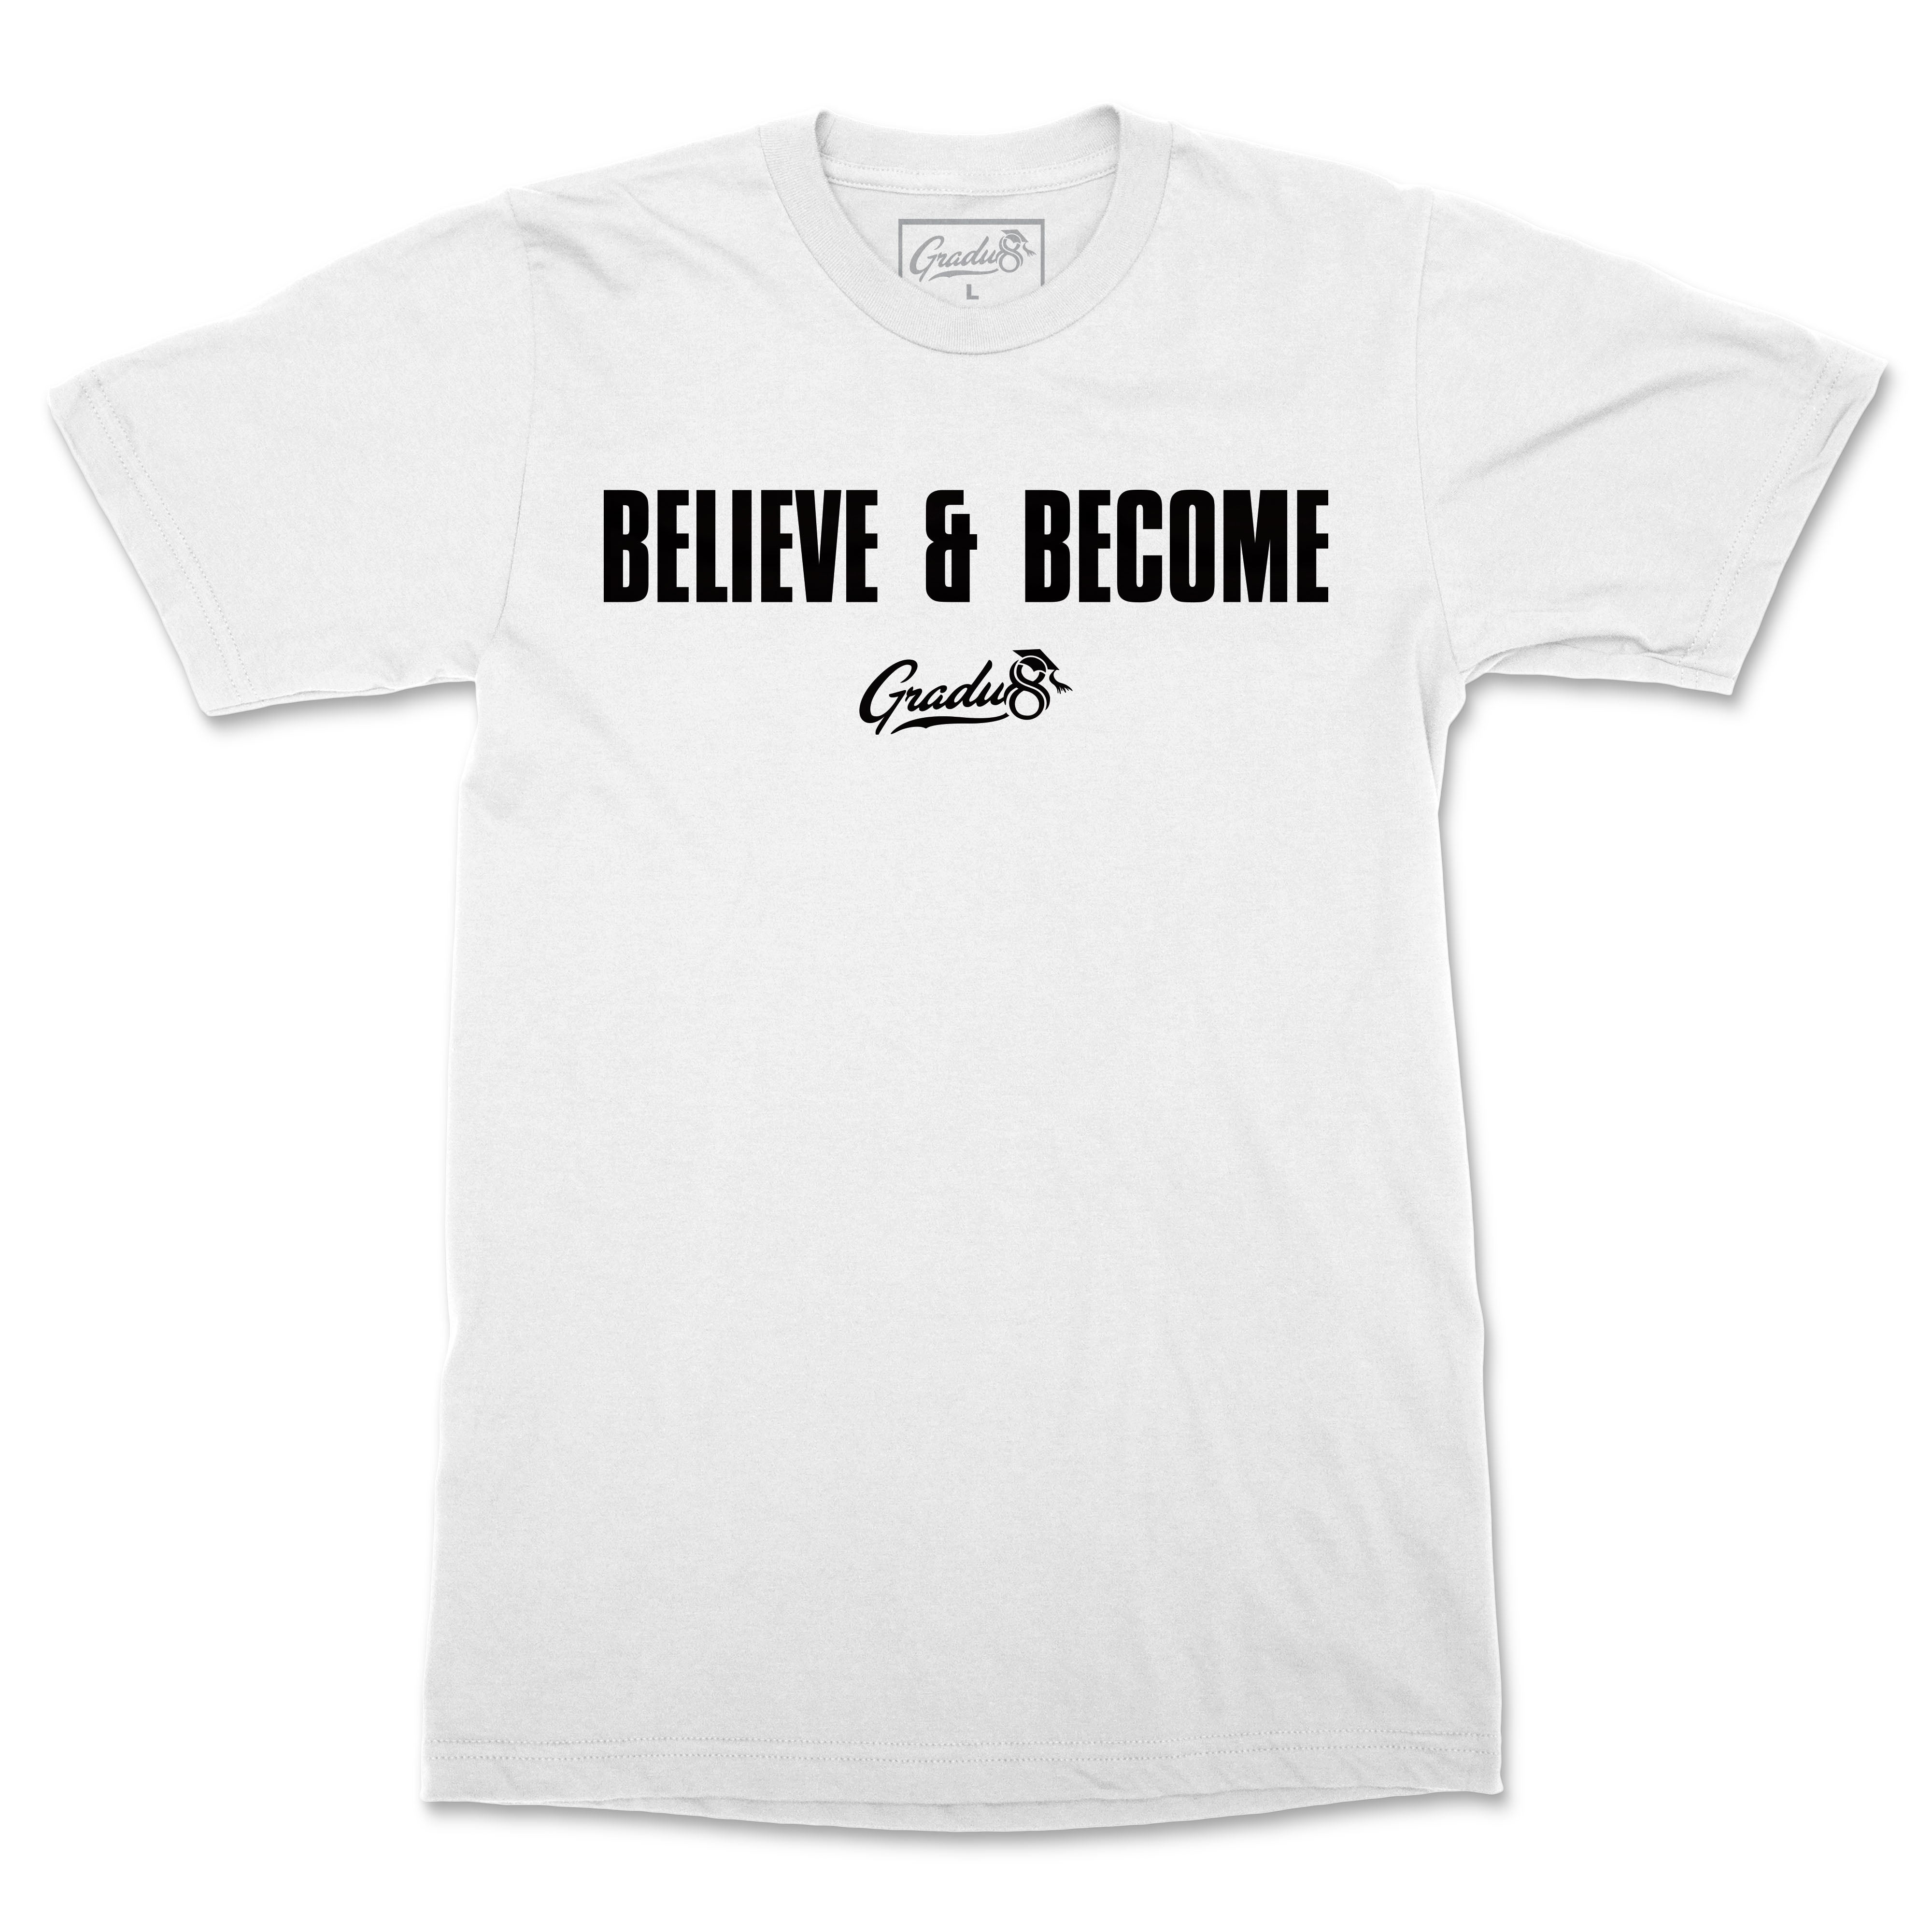 Original Gradu8 Believe & Become  T-shirt - White